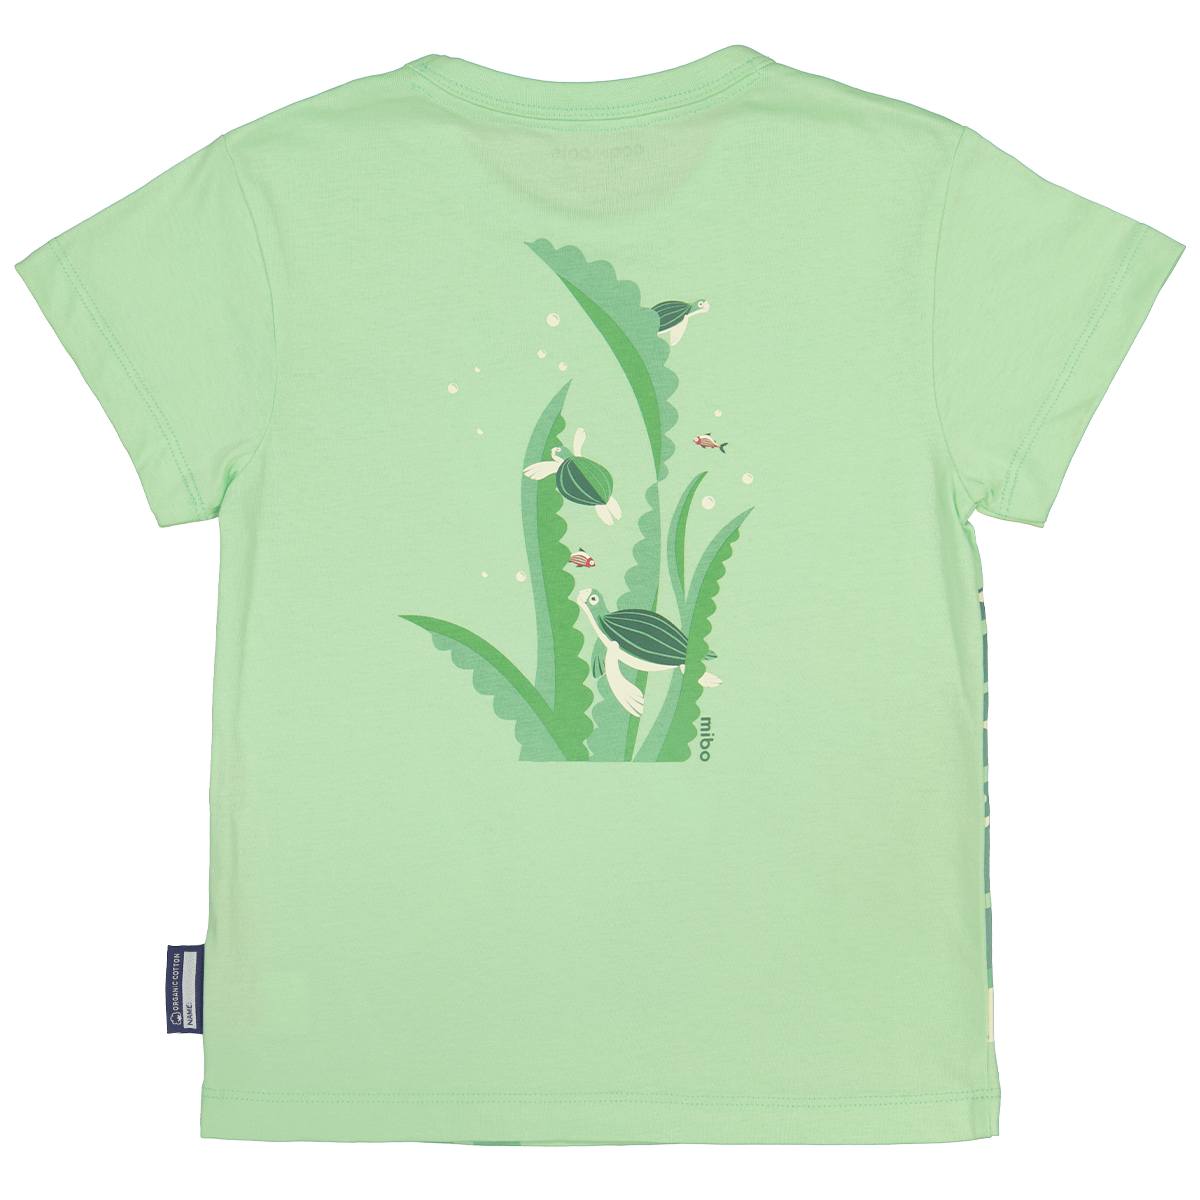 Coq en Pate // Kinder T-Shirt // Meeresschildkröte // Grün